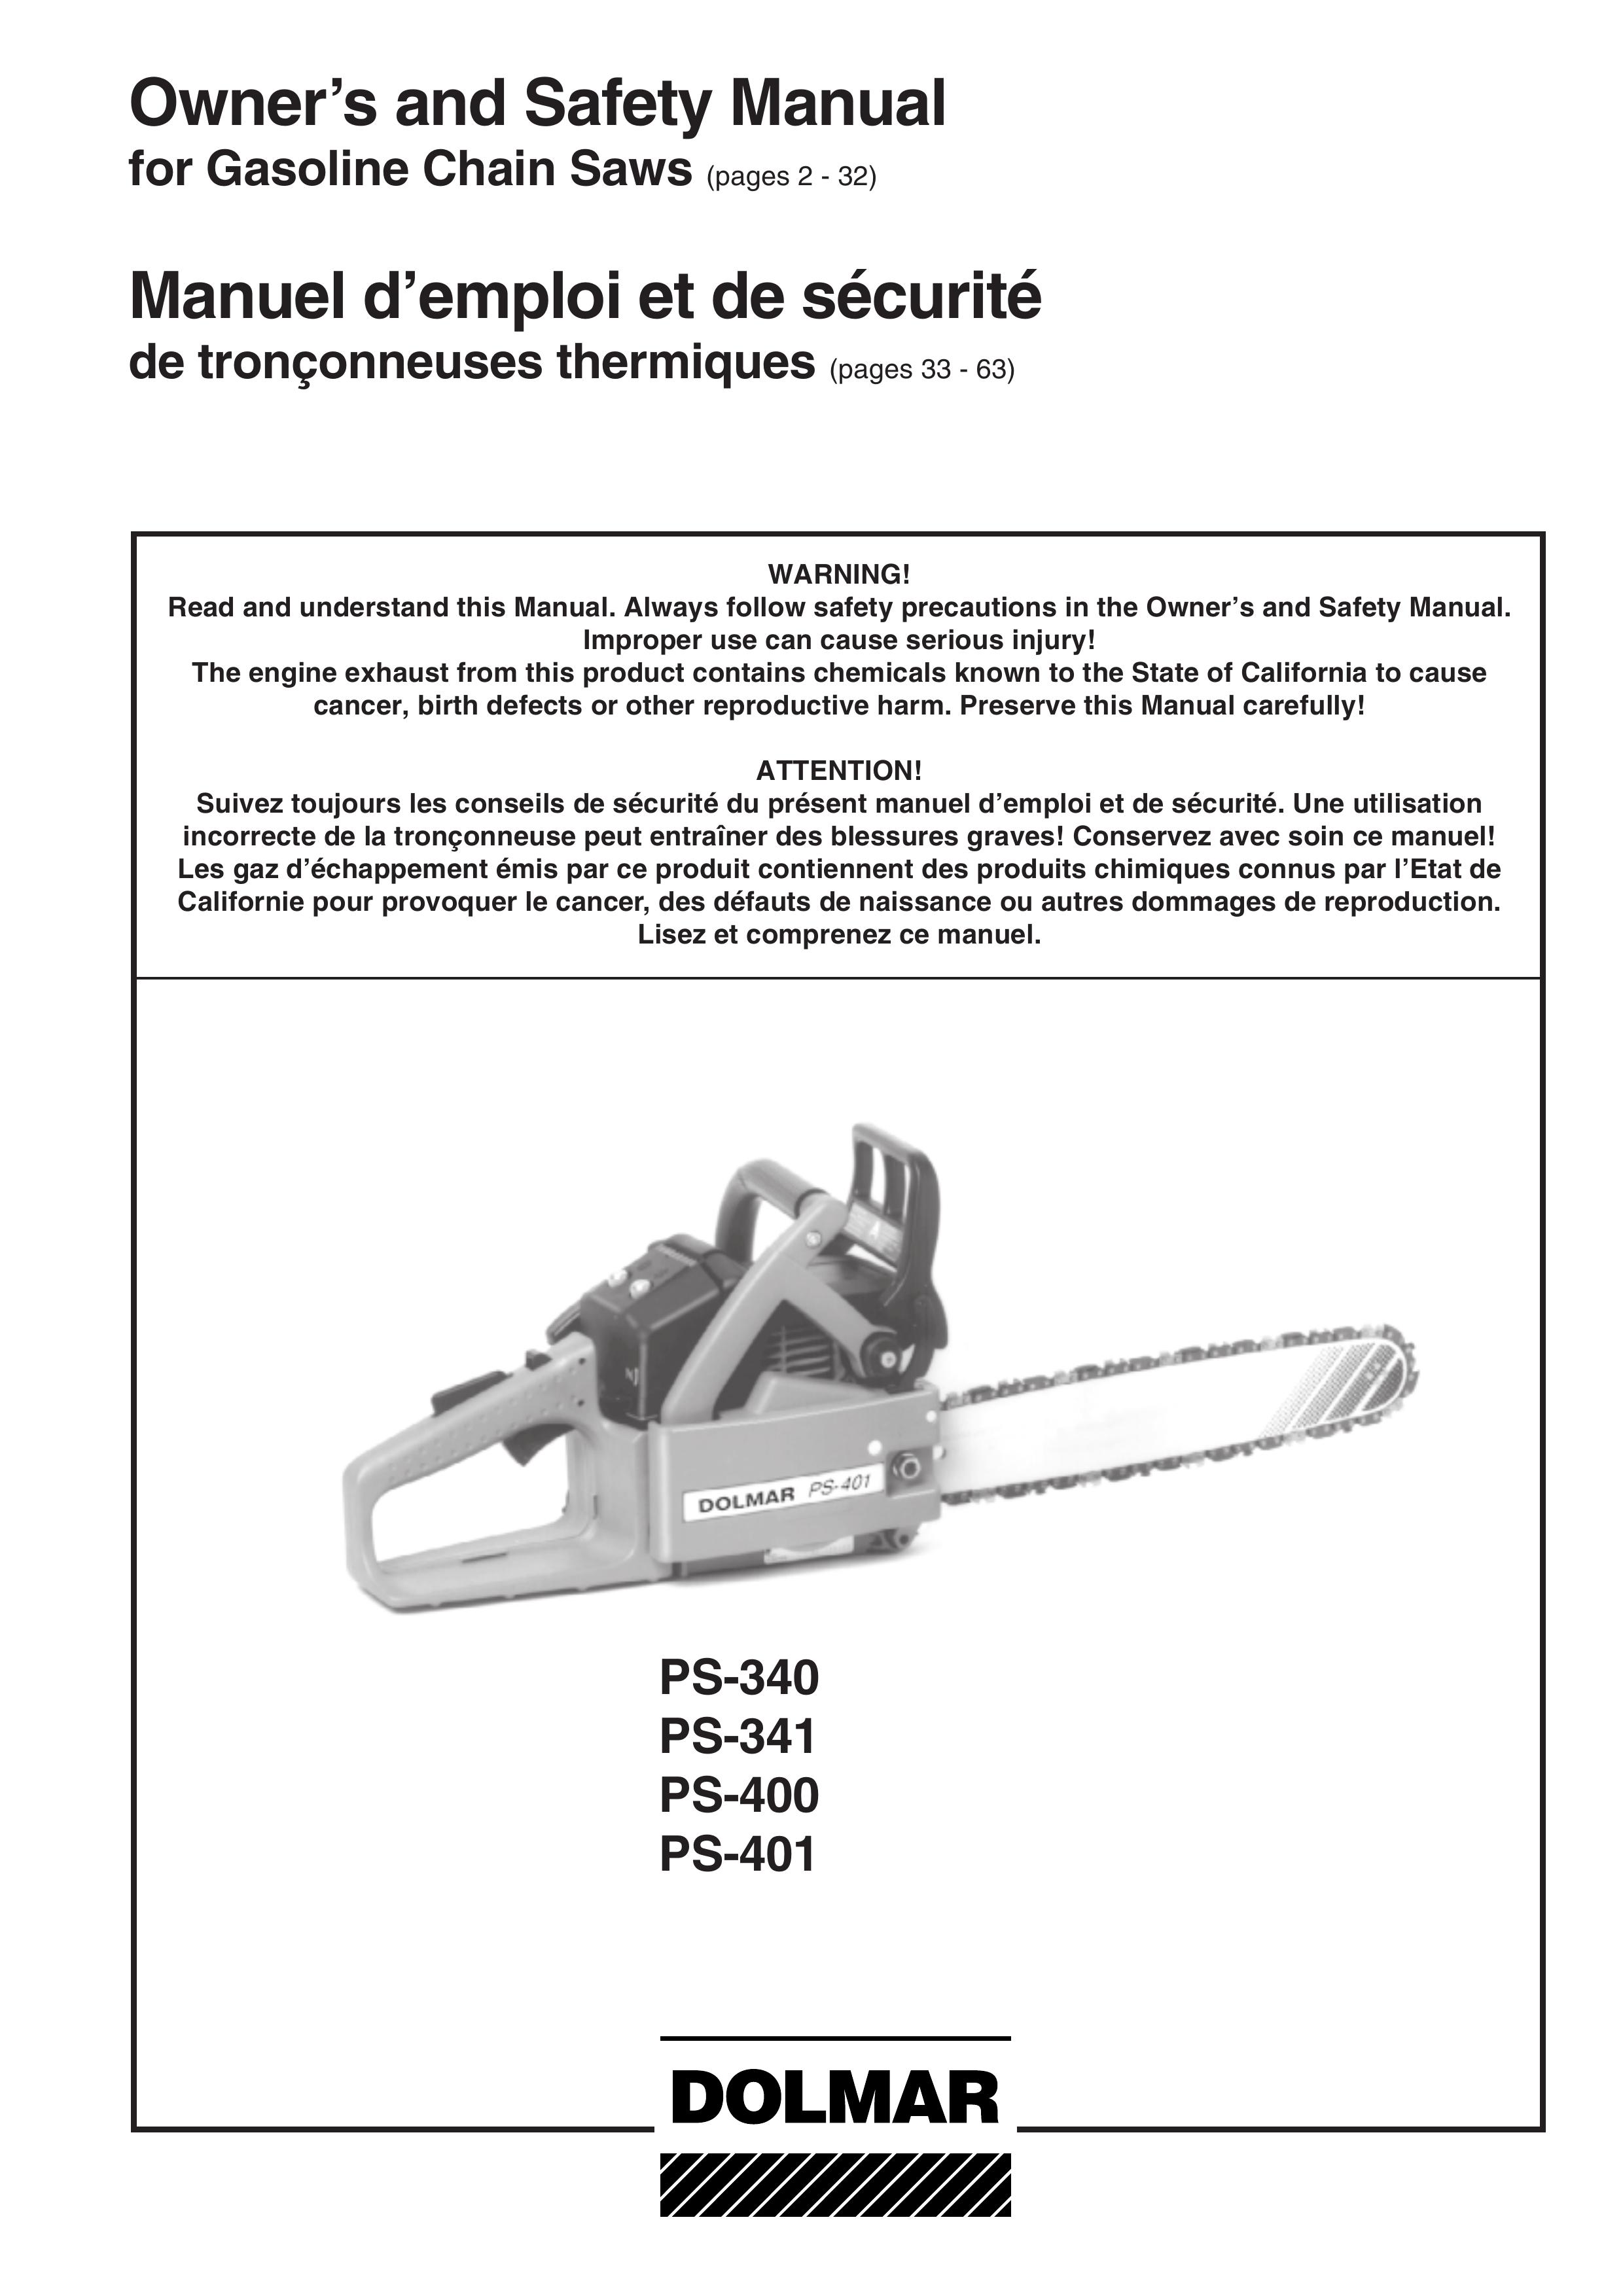 Dolmar PS-401 Chainsaw User Manual